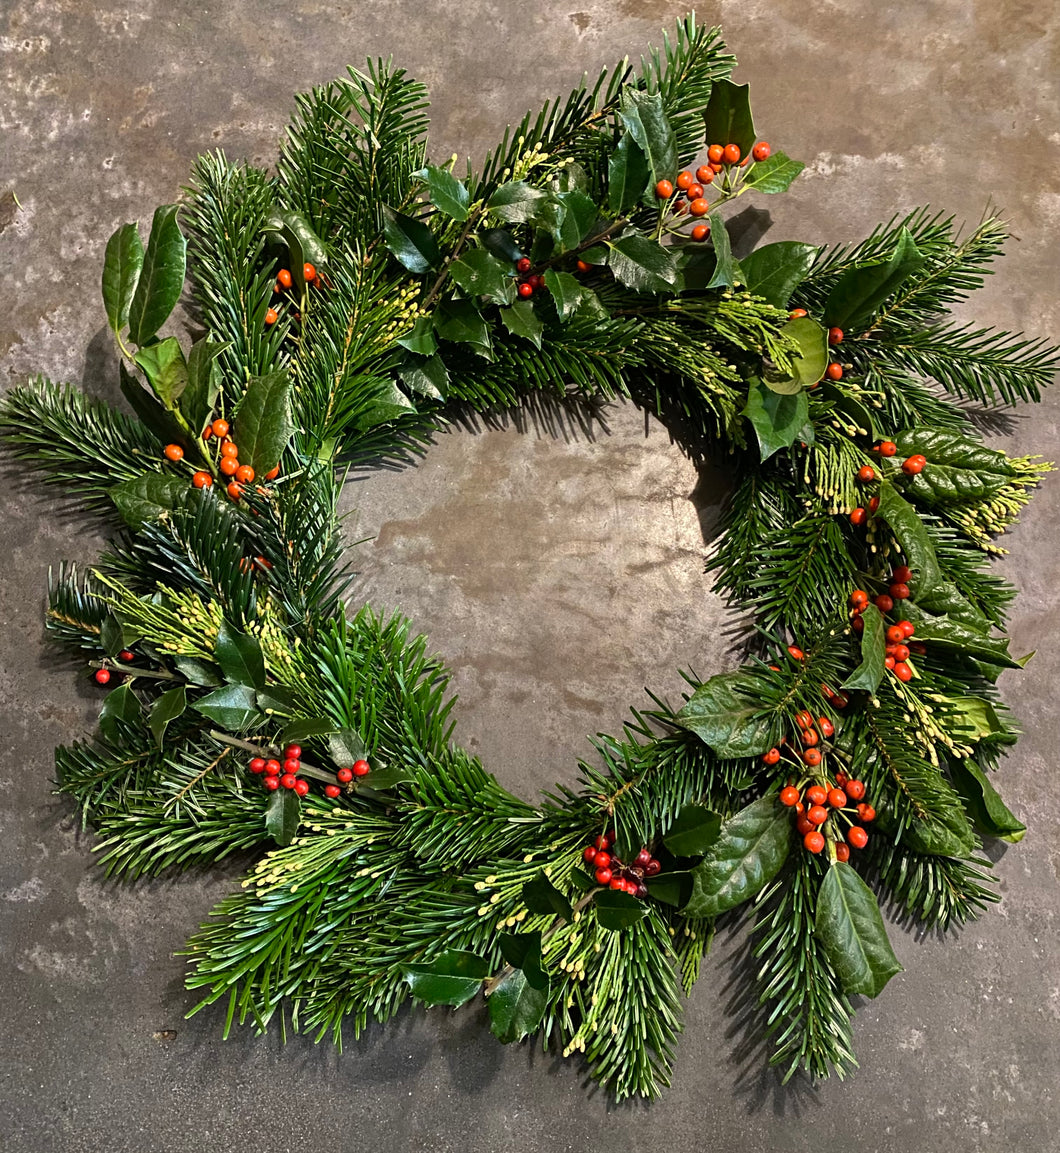 Holiday Wreath Workshops - Reservation